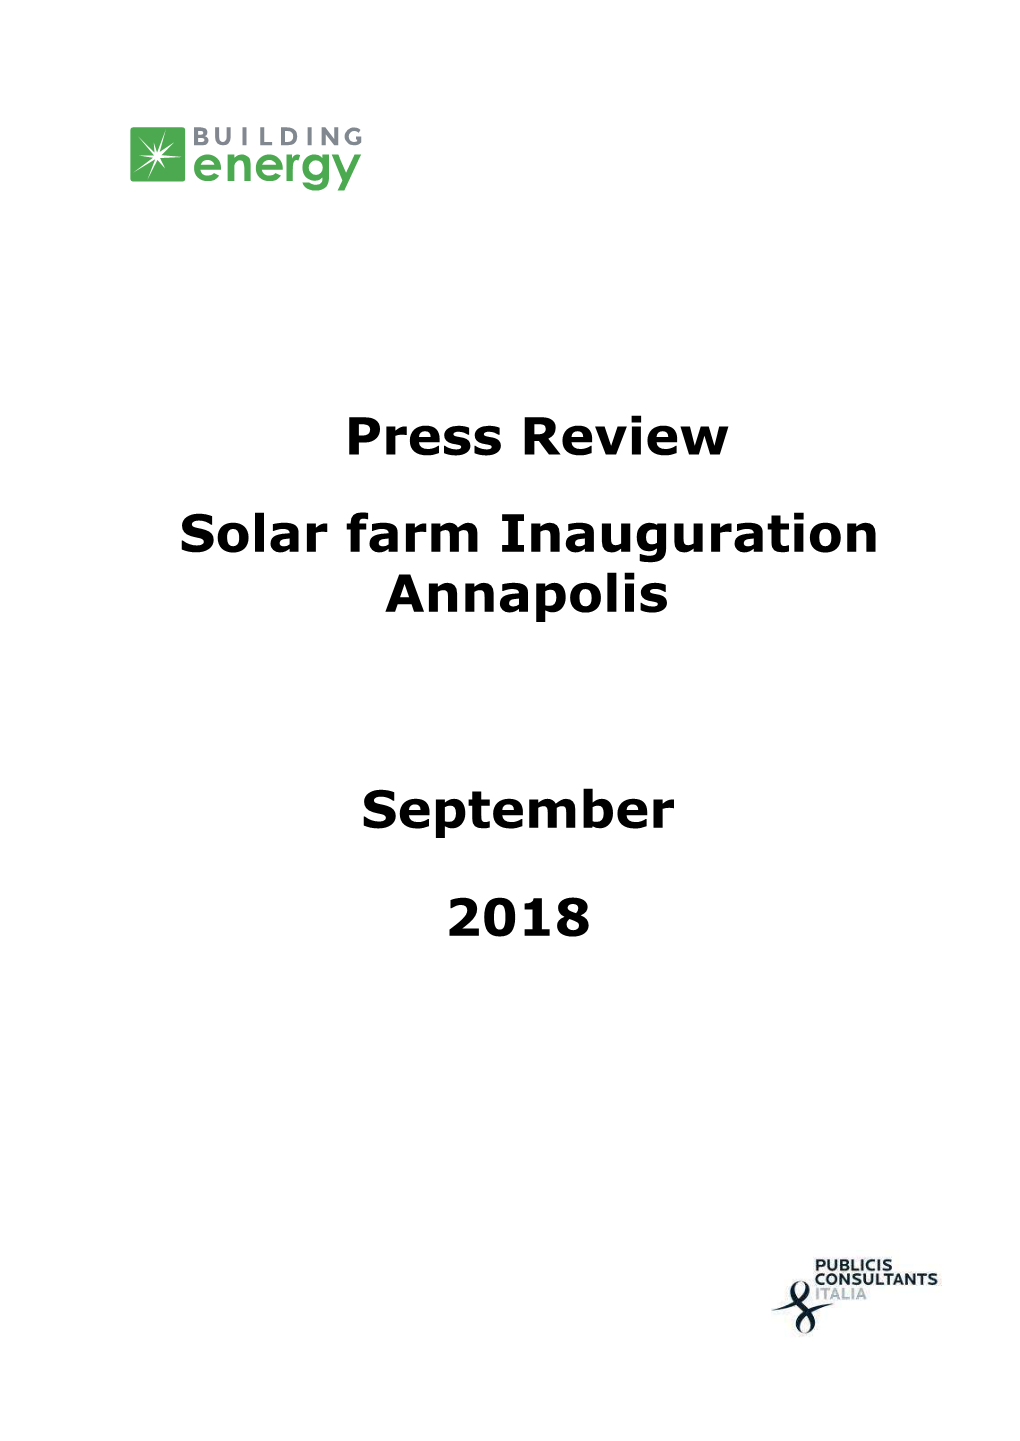 Press Review Solar Farm Inauguration Annapolis